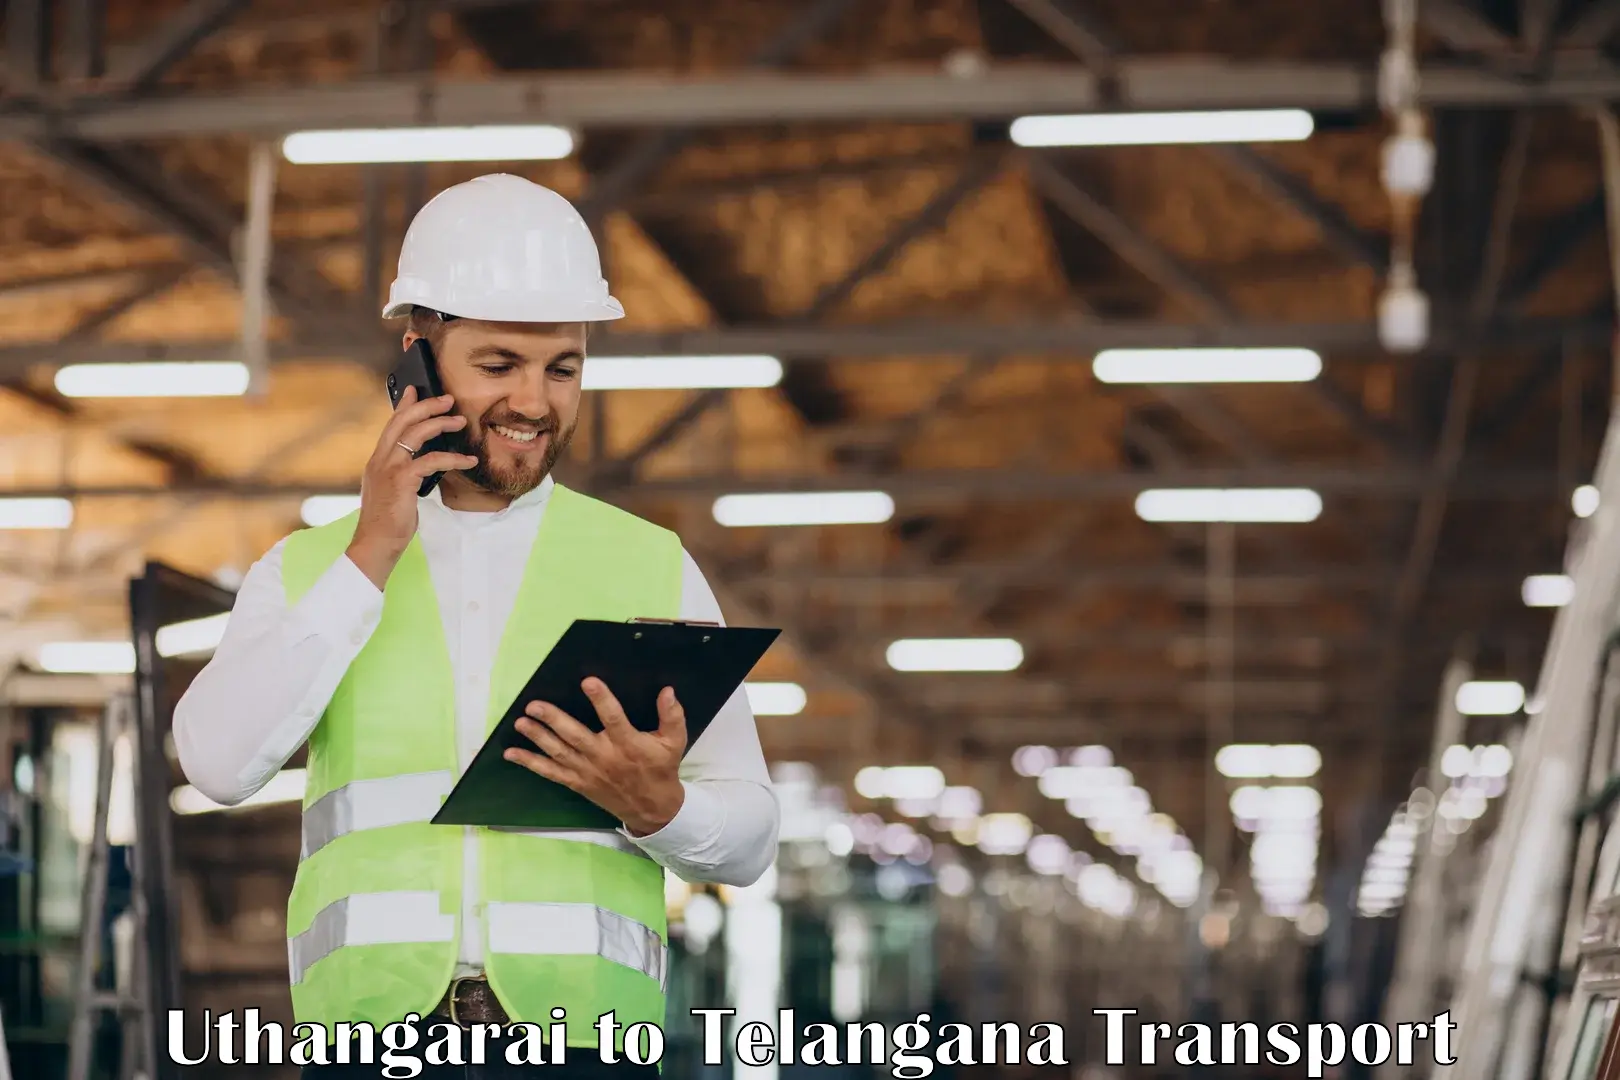 Truck transport companies in India in Uthangarai to Sangareddy